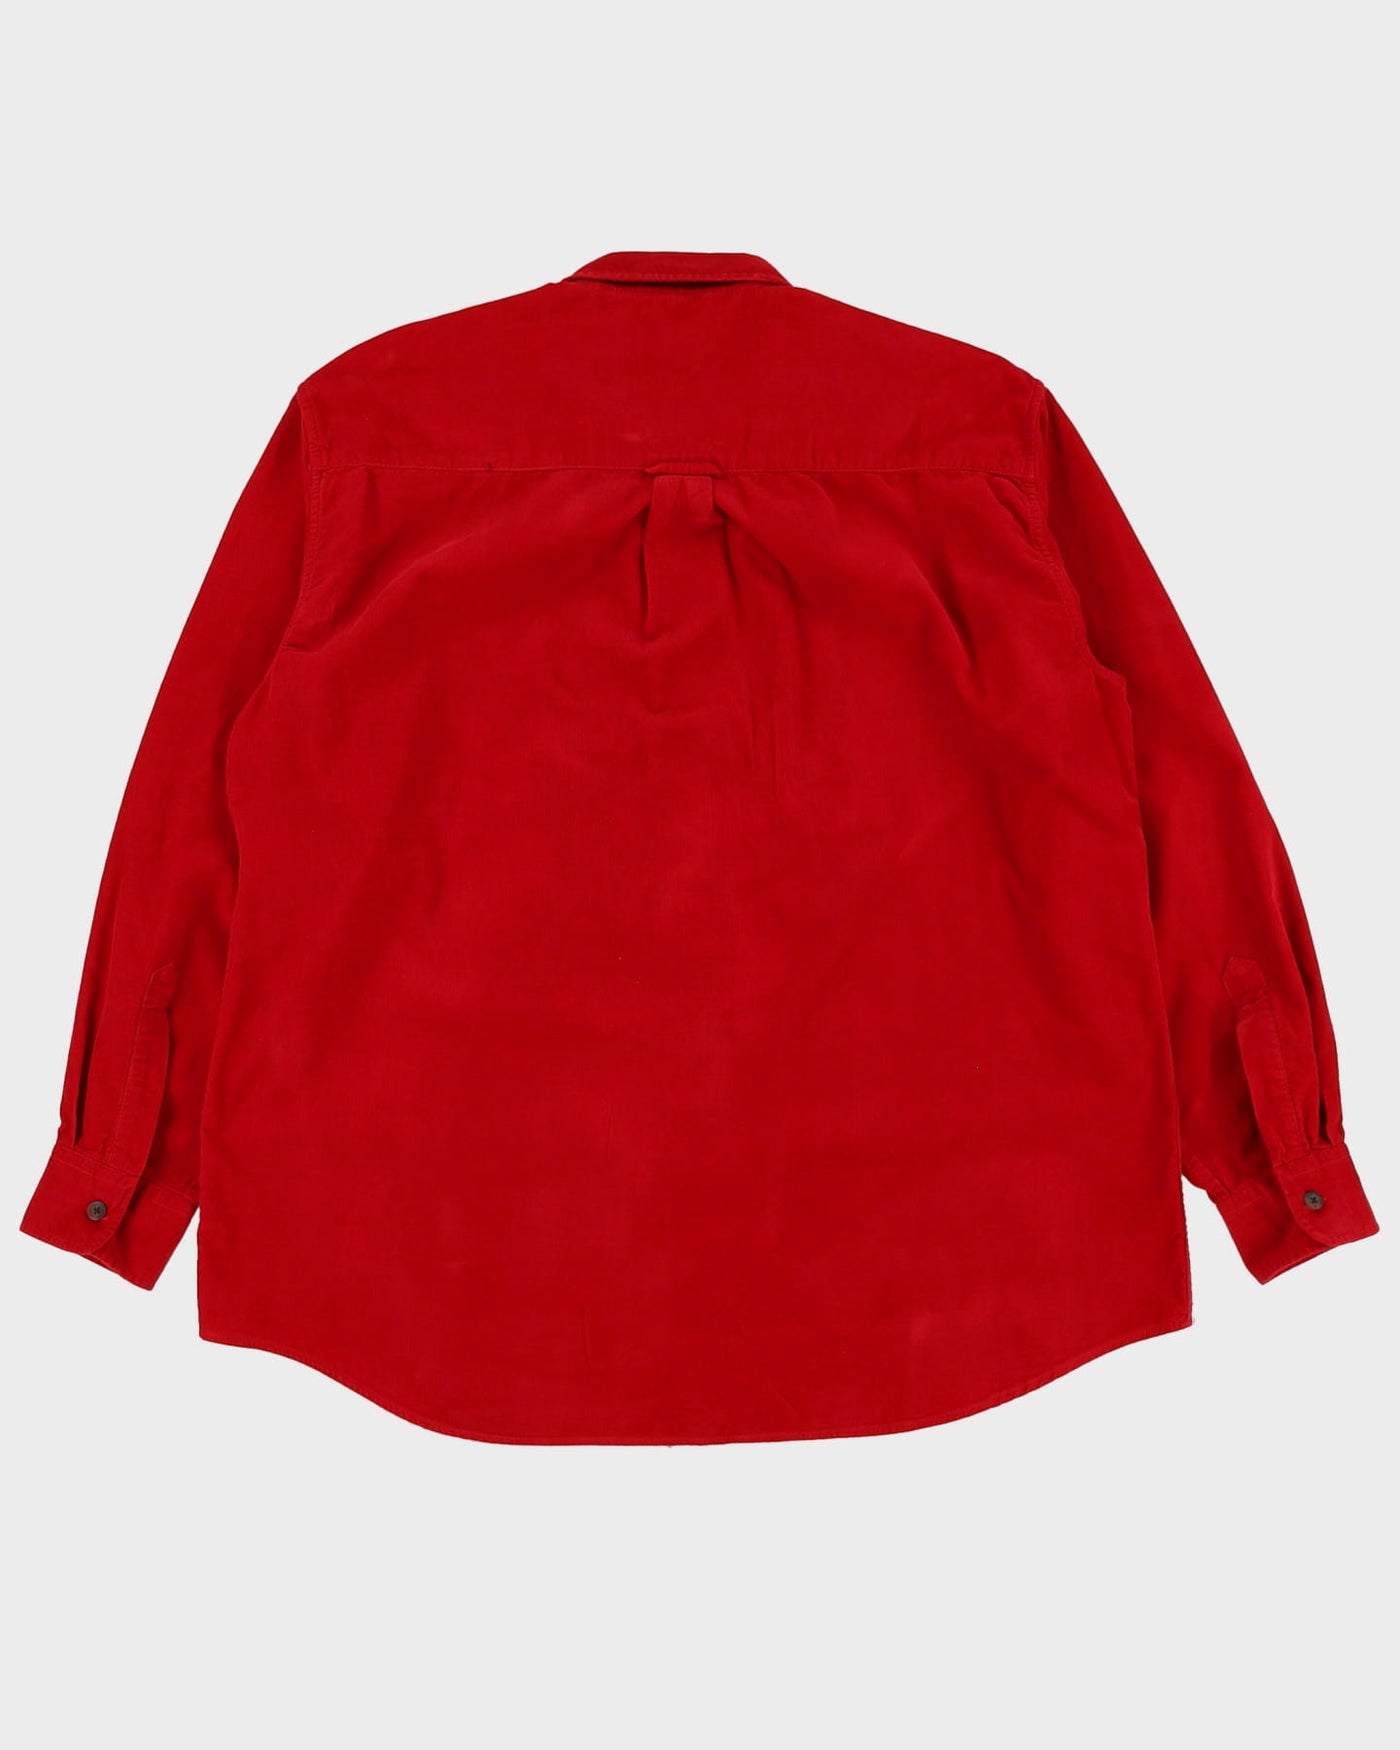 80s Pendleton Red Cord Shirt - XL